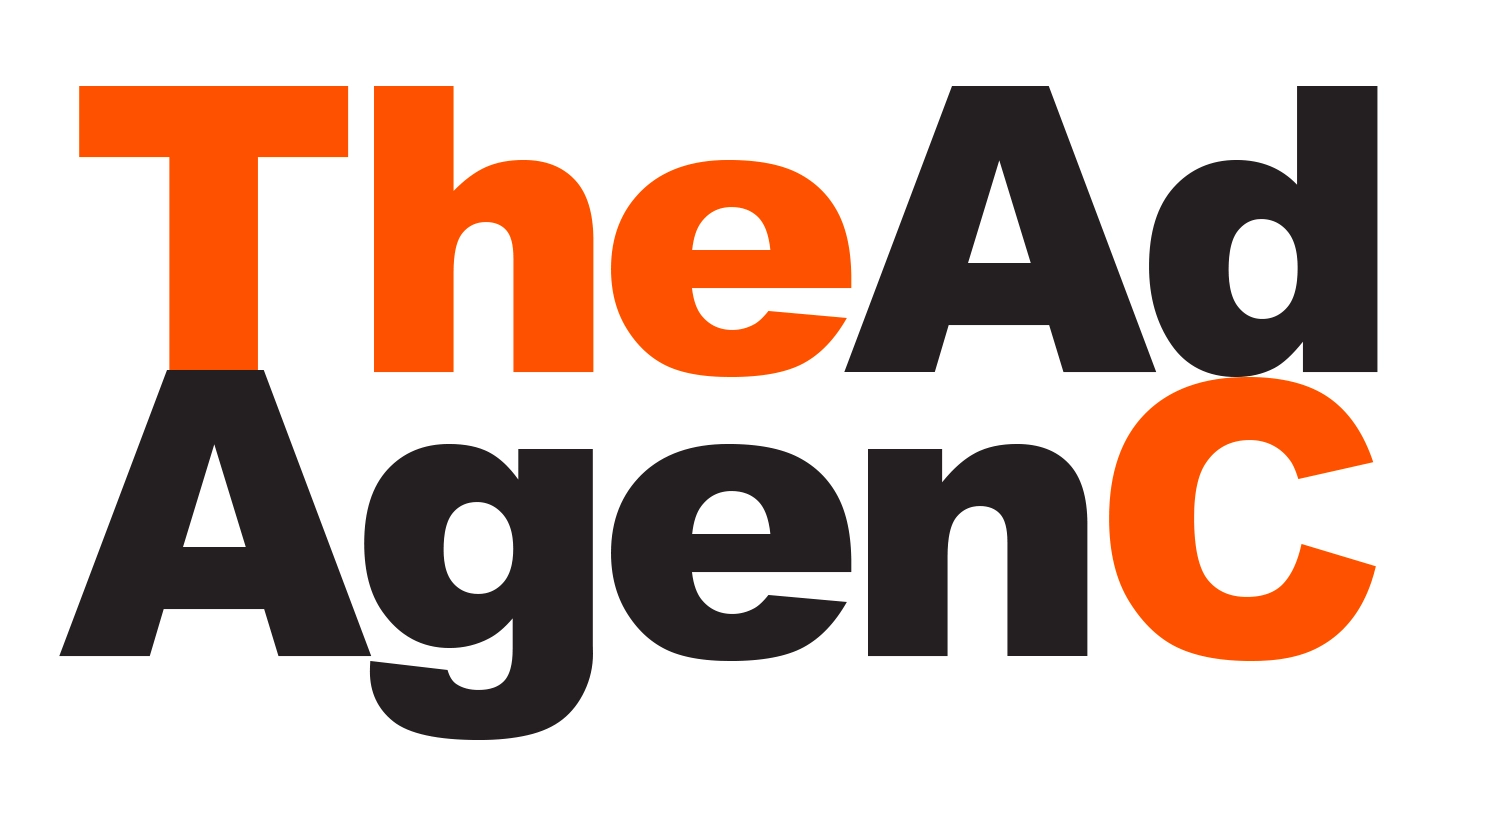 The Ad AgenC